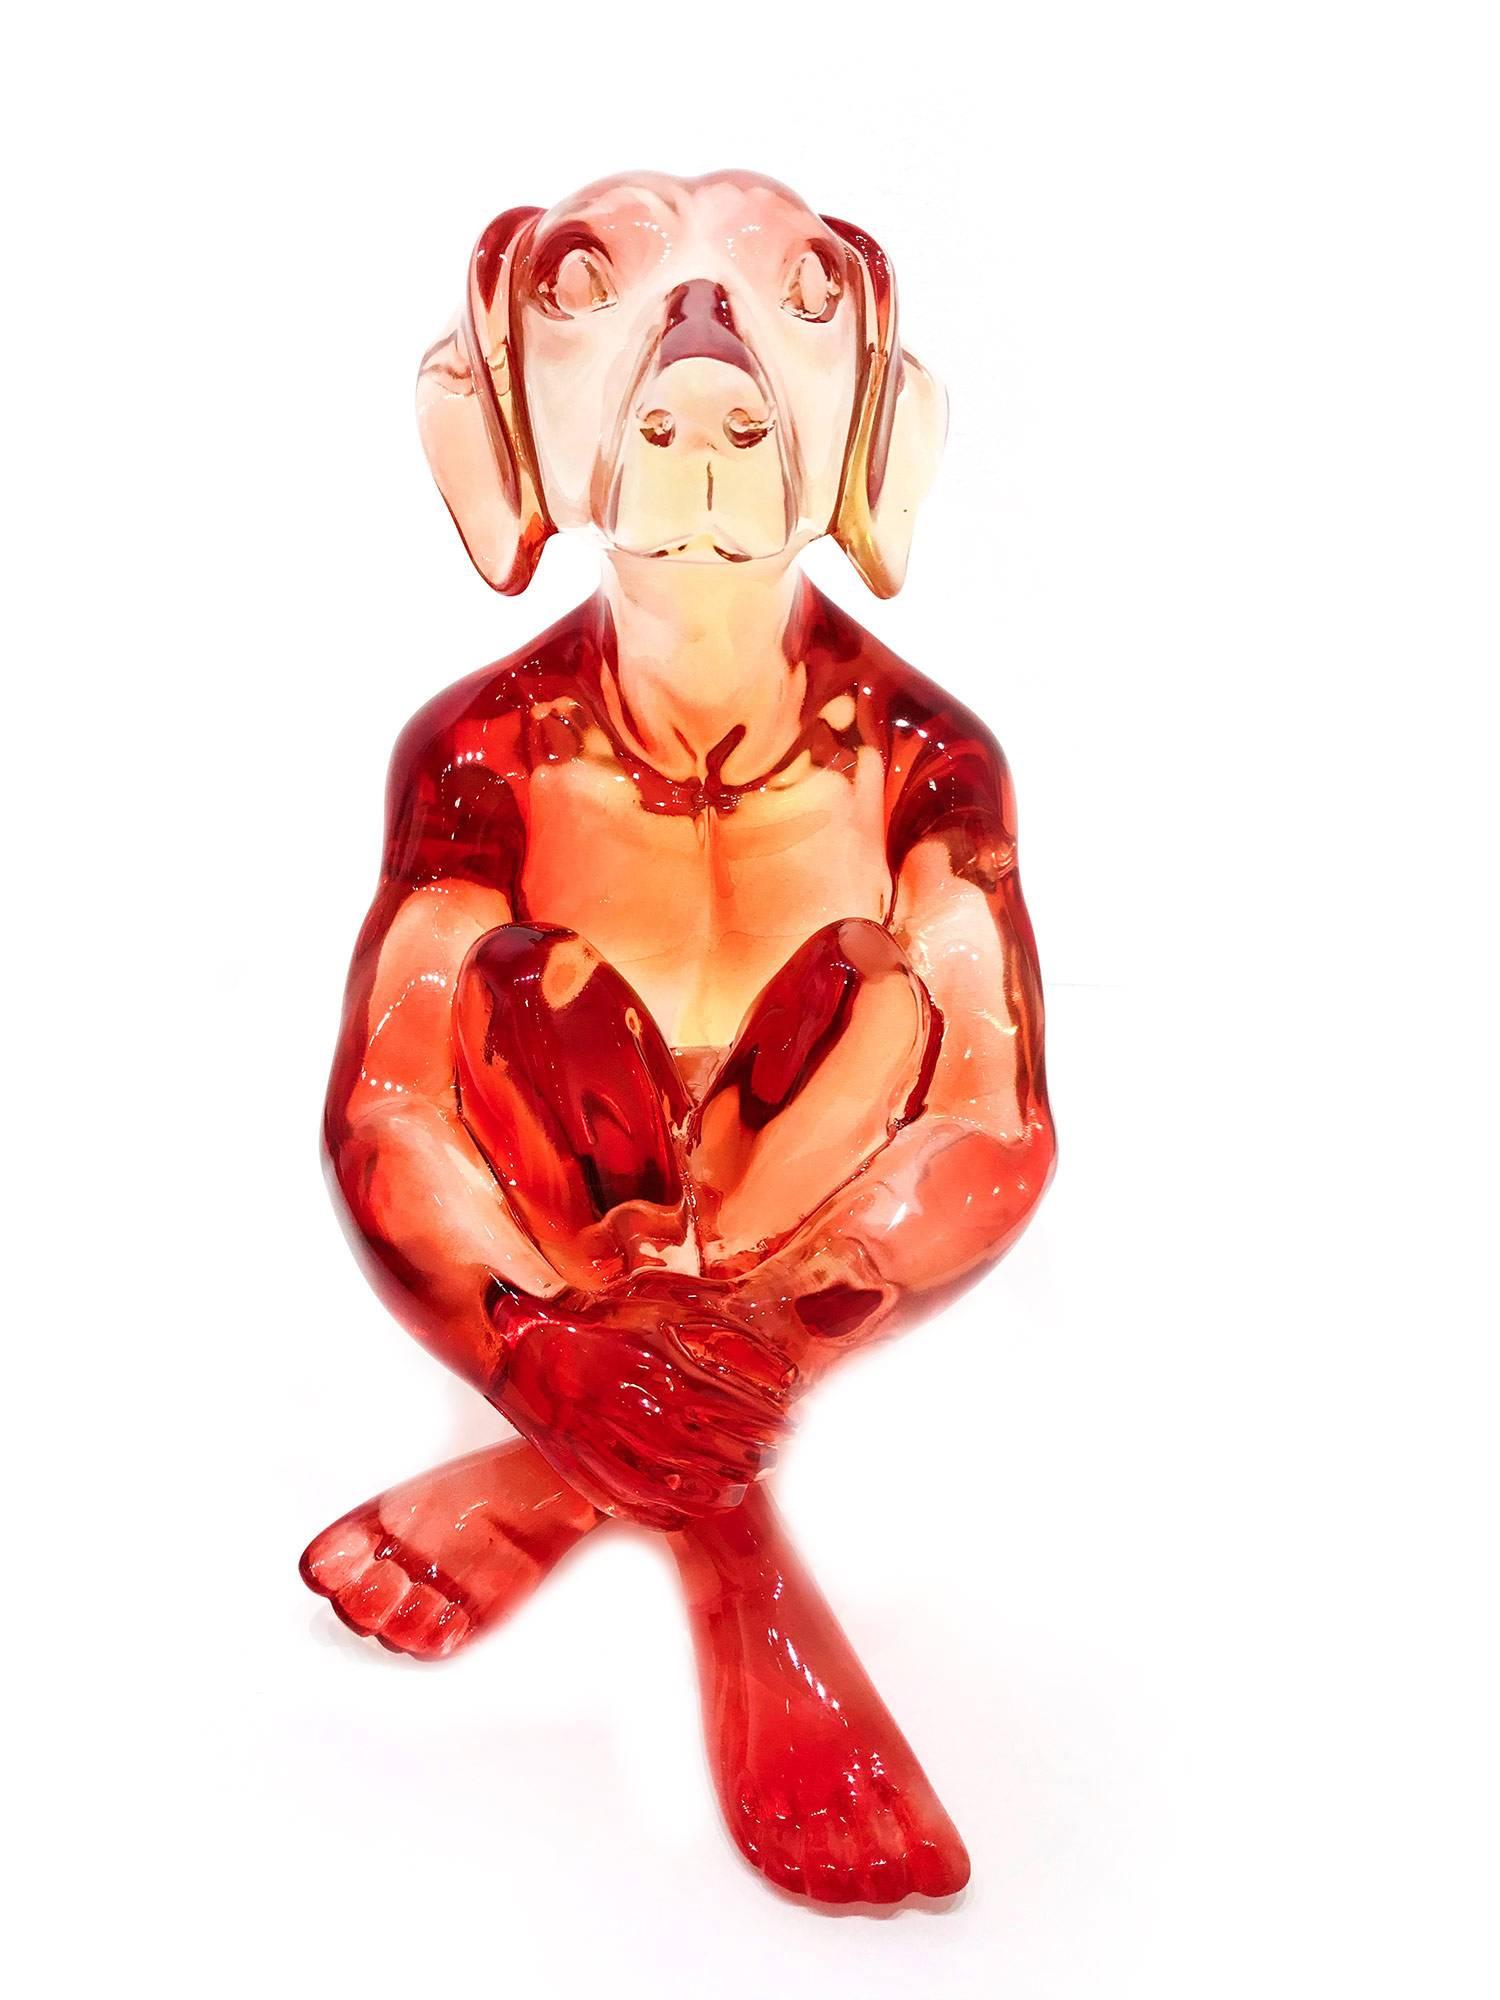 Raspberry Swirl Dogman - Pop Art Sculpture by Gillie and Marc Schattner